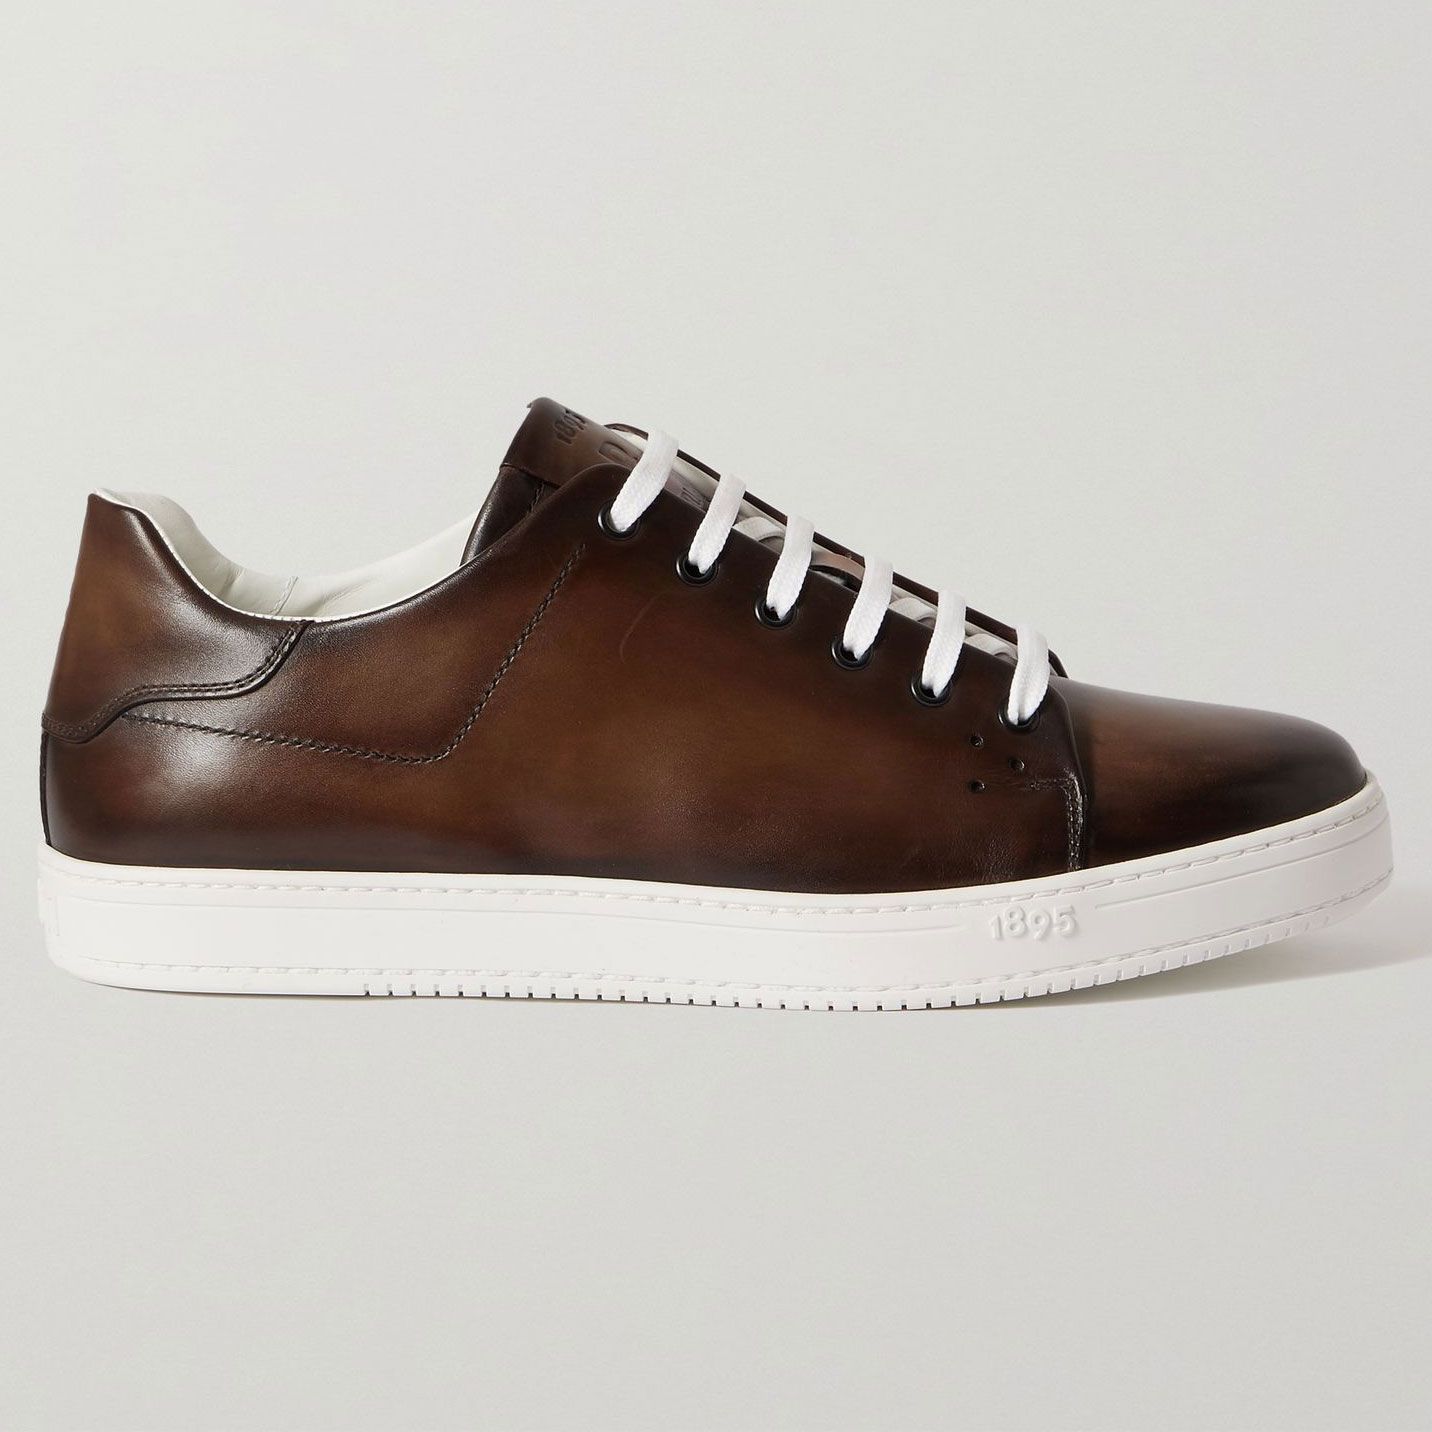 Buy > designer leather sneakers > in stock